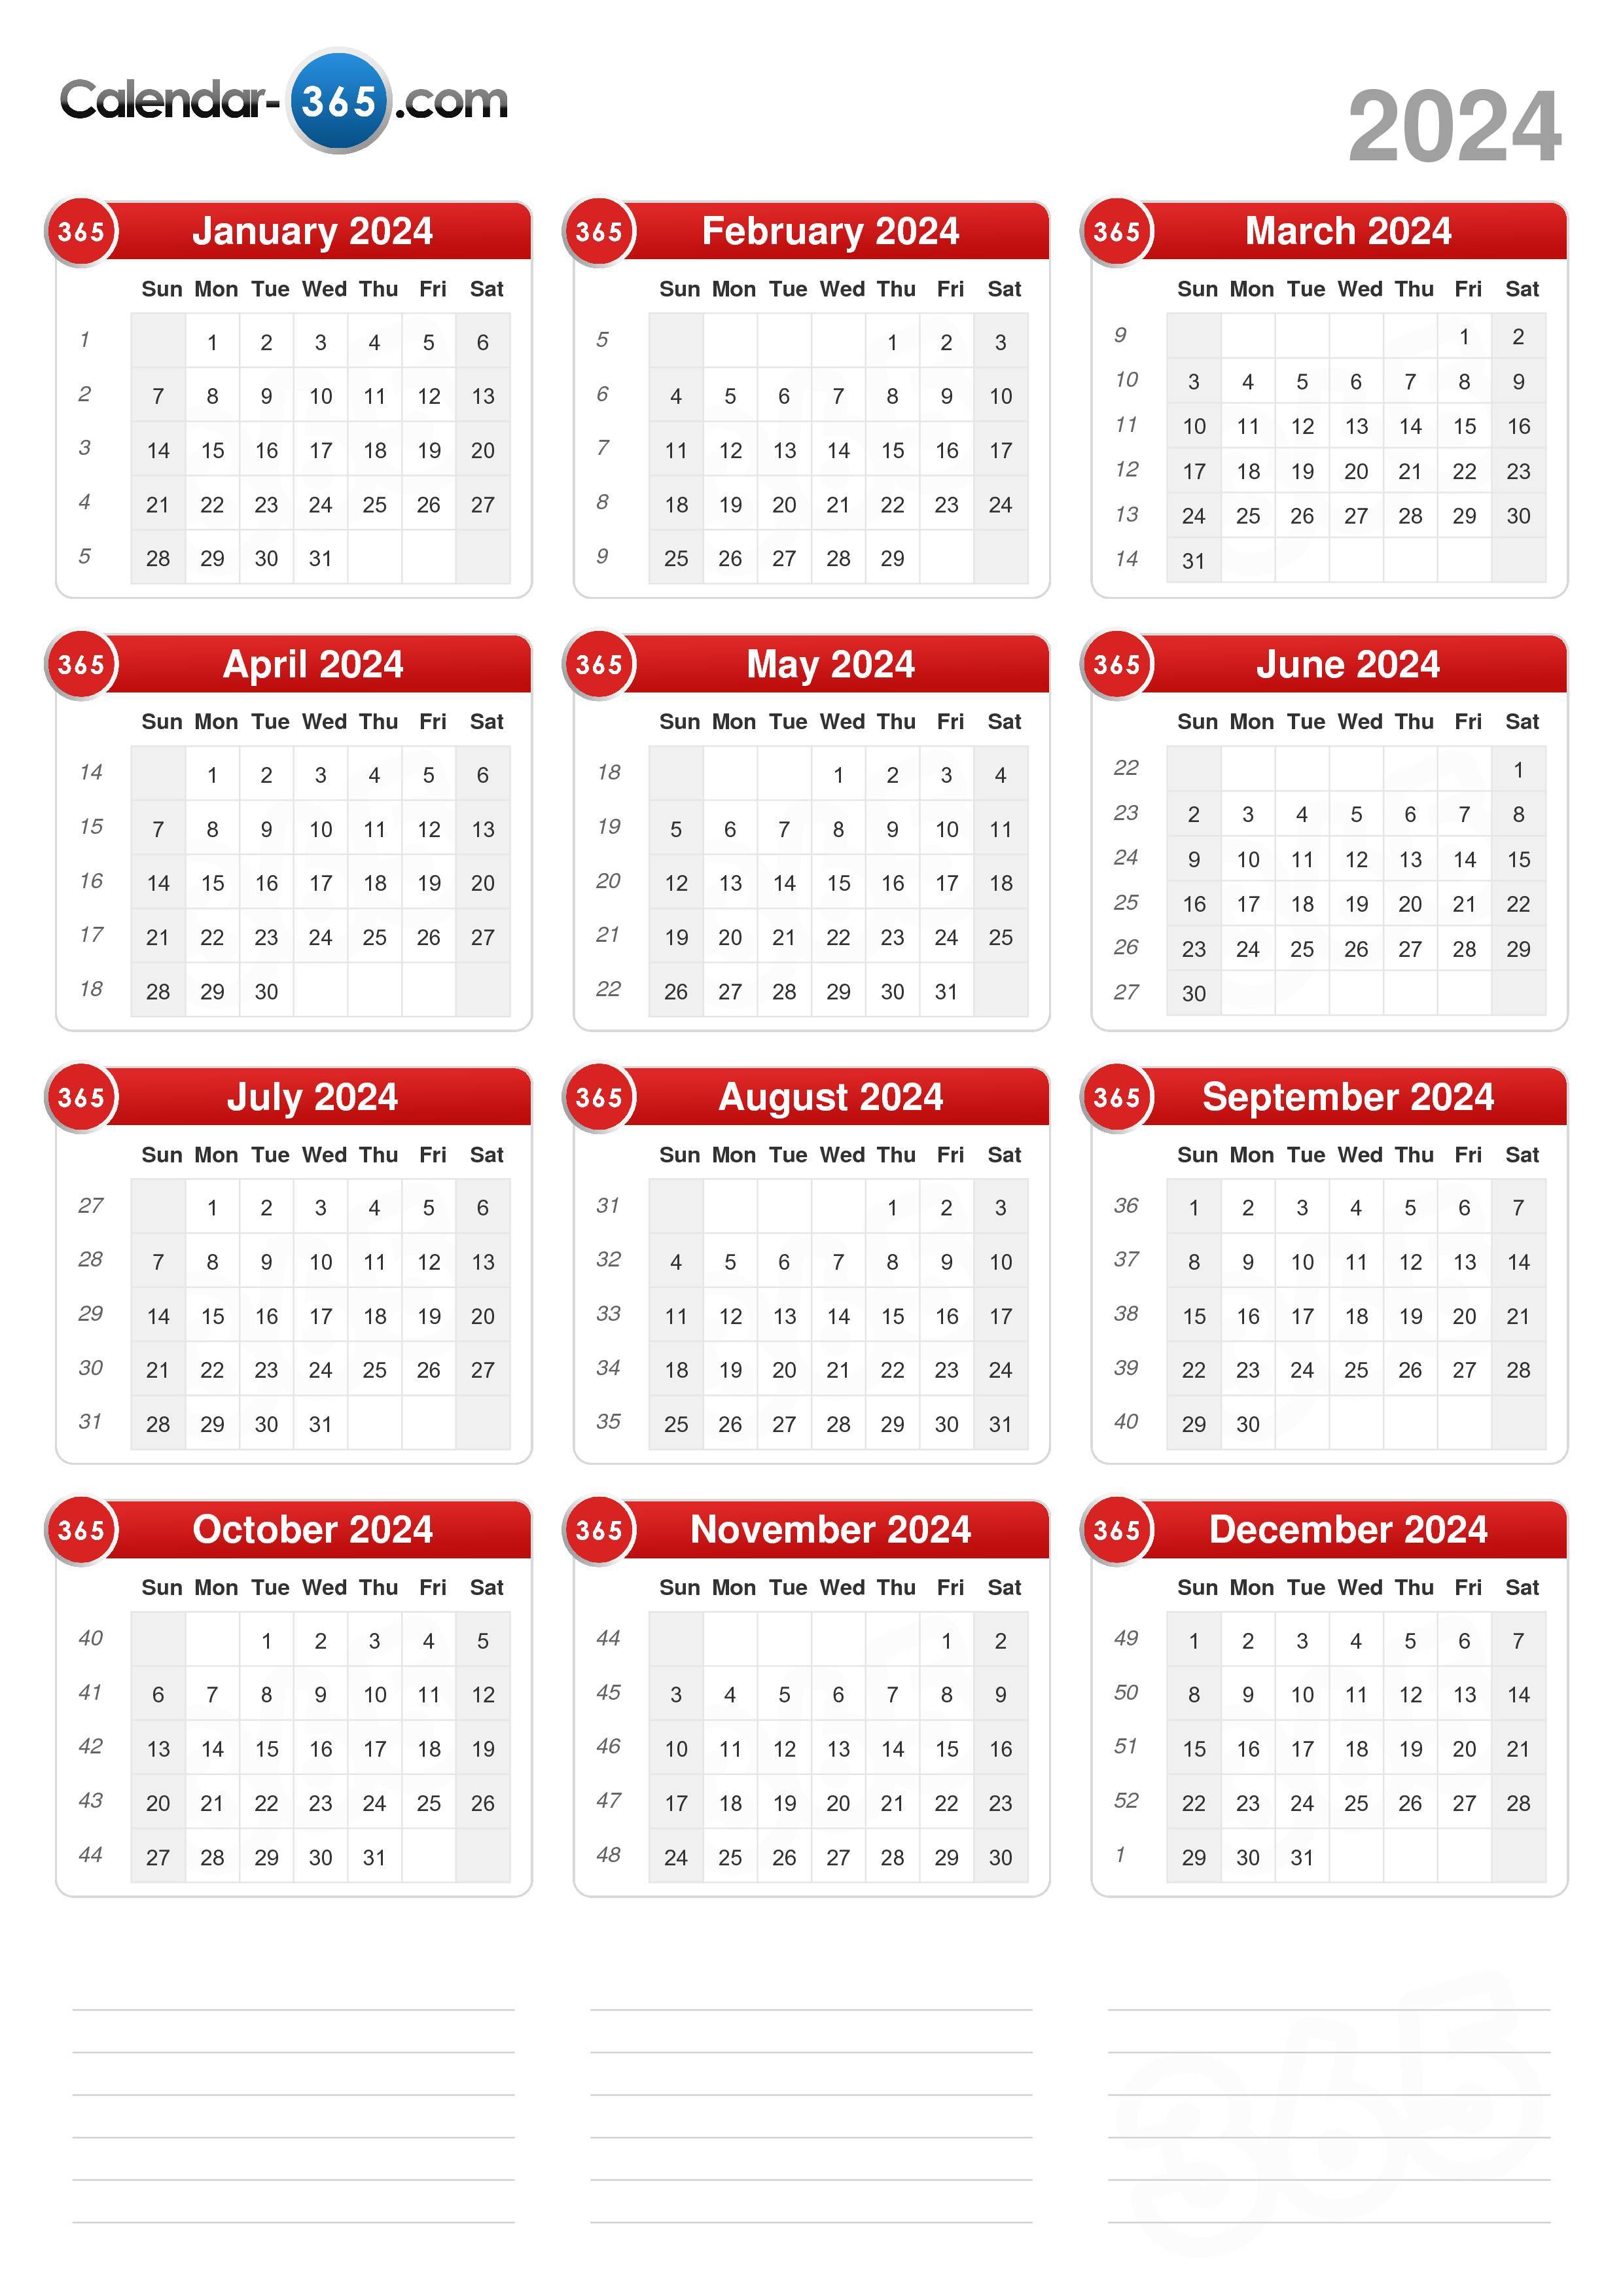 Doe Employee Calendar 2024 - Easy to Use Calendar App 2024